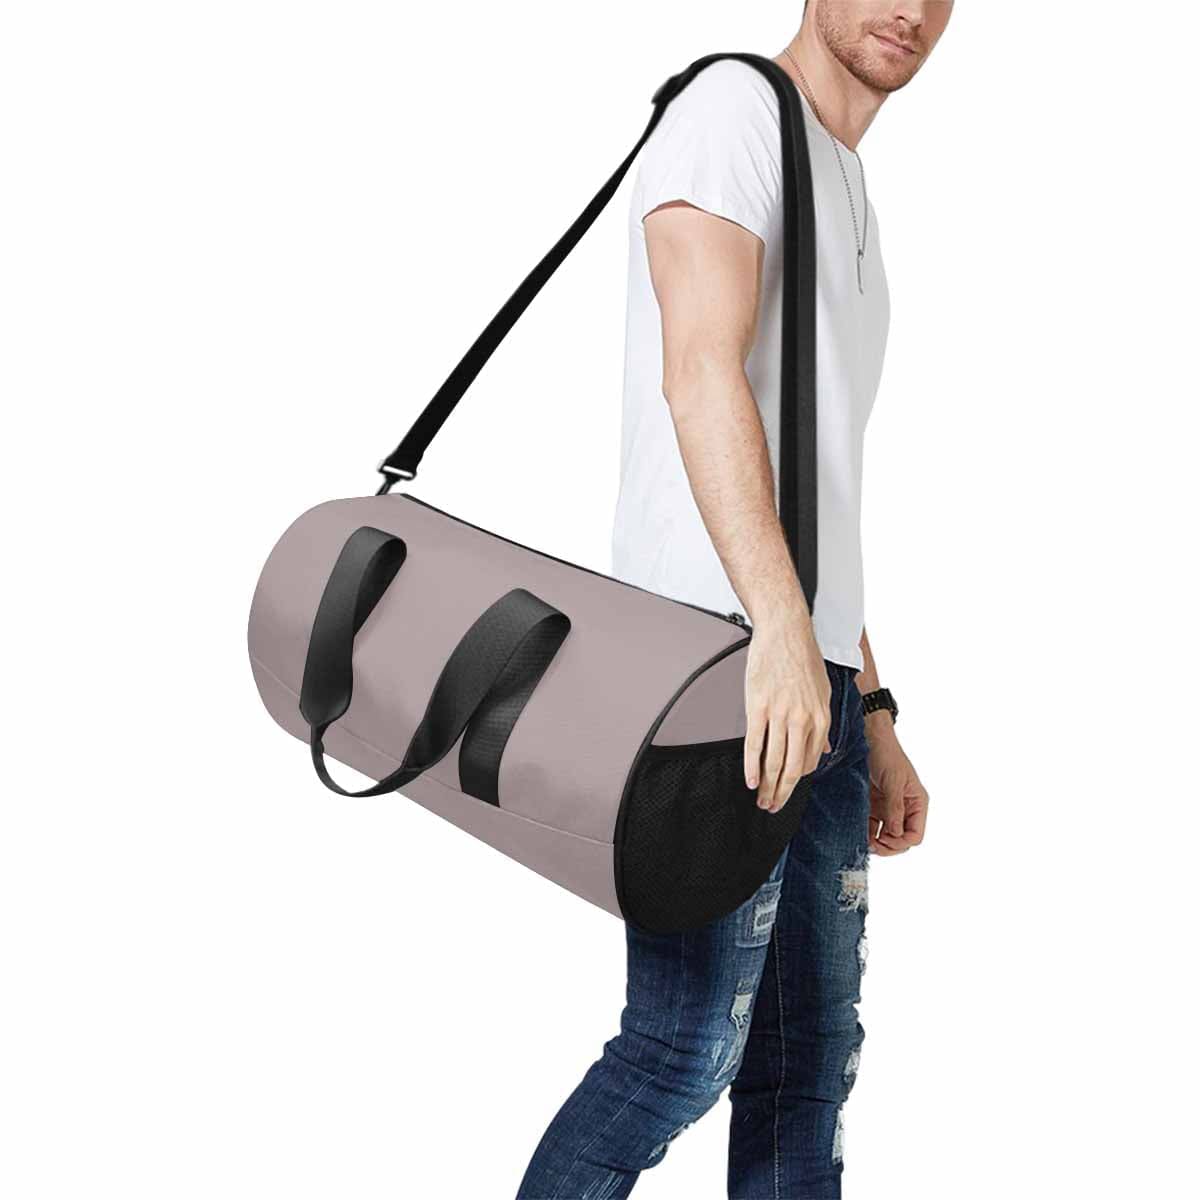 Duffel Bag Coffee Brown Travel Carry On - Bags | Duffel Bags